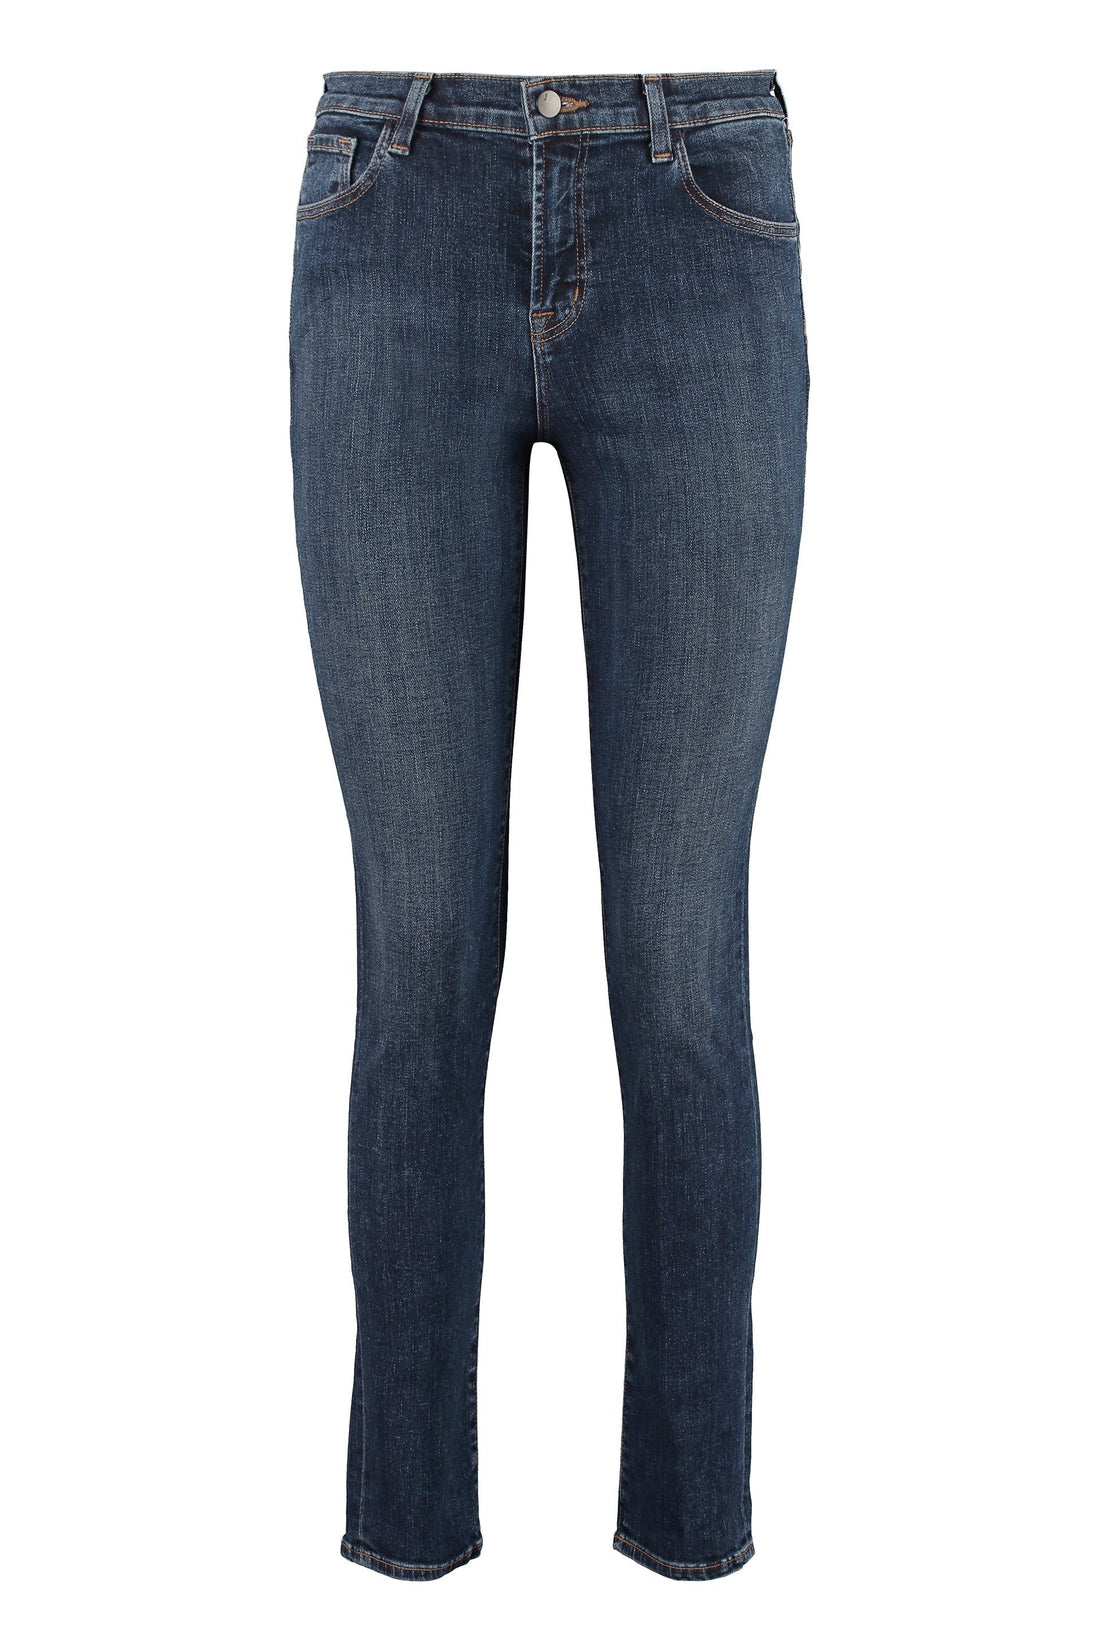 J Brand-OUTLET-SALE-Ruby 30 skinny jeans-ARCHIVIST